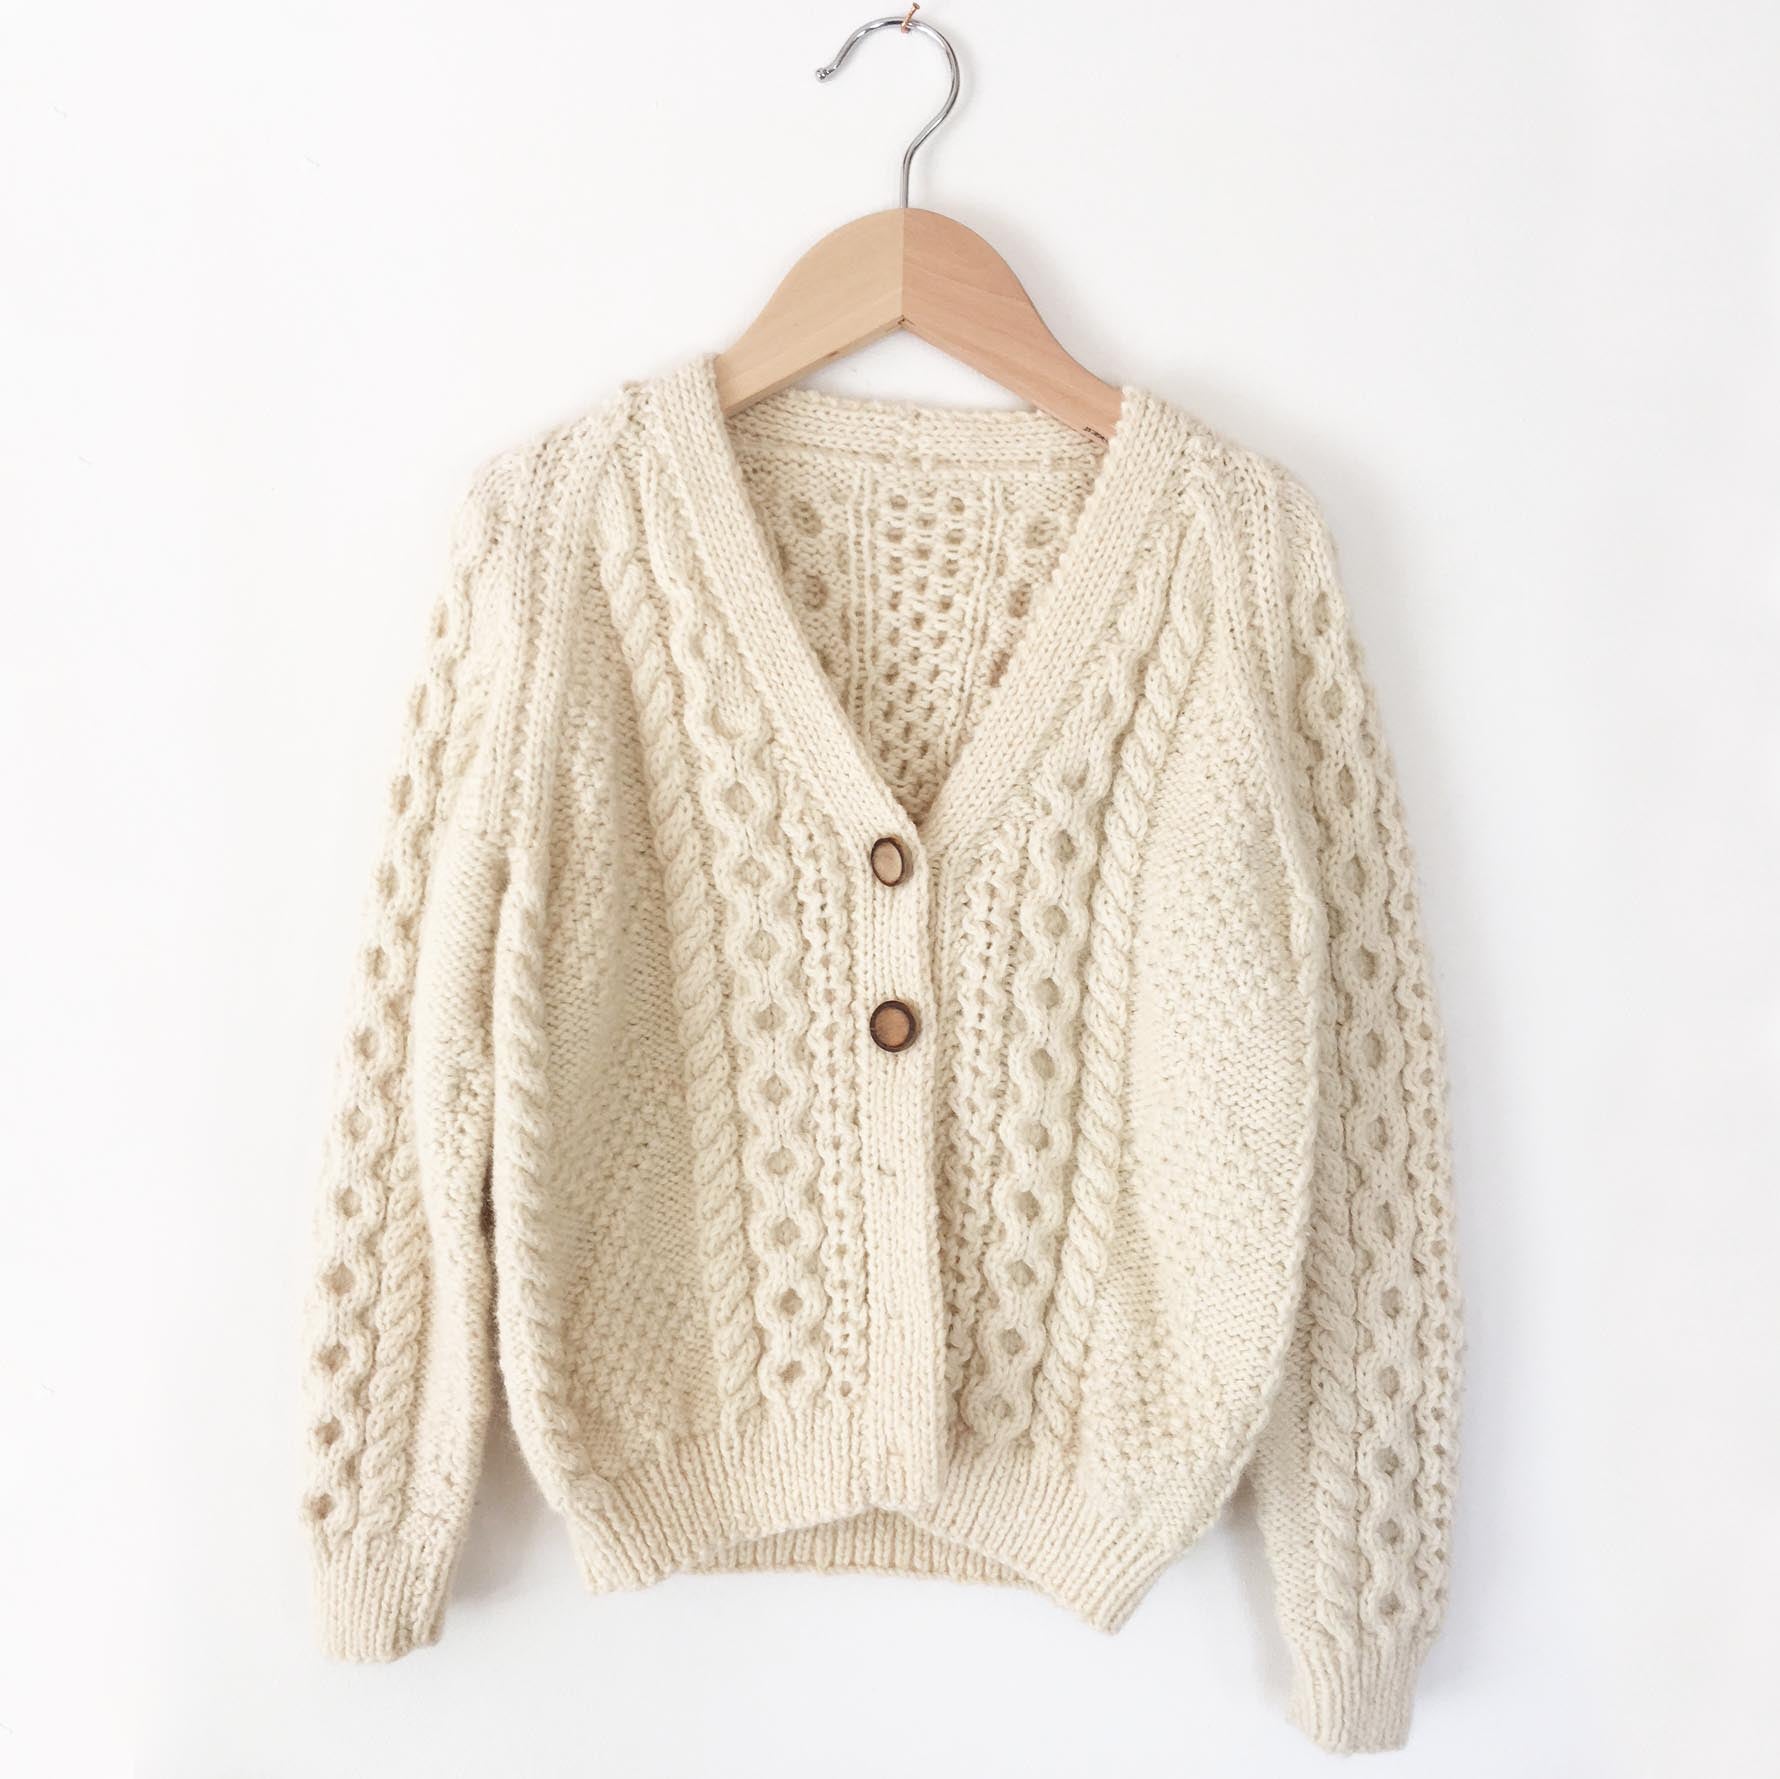 Arran hand knit sweater size 4-6